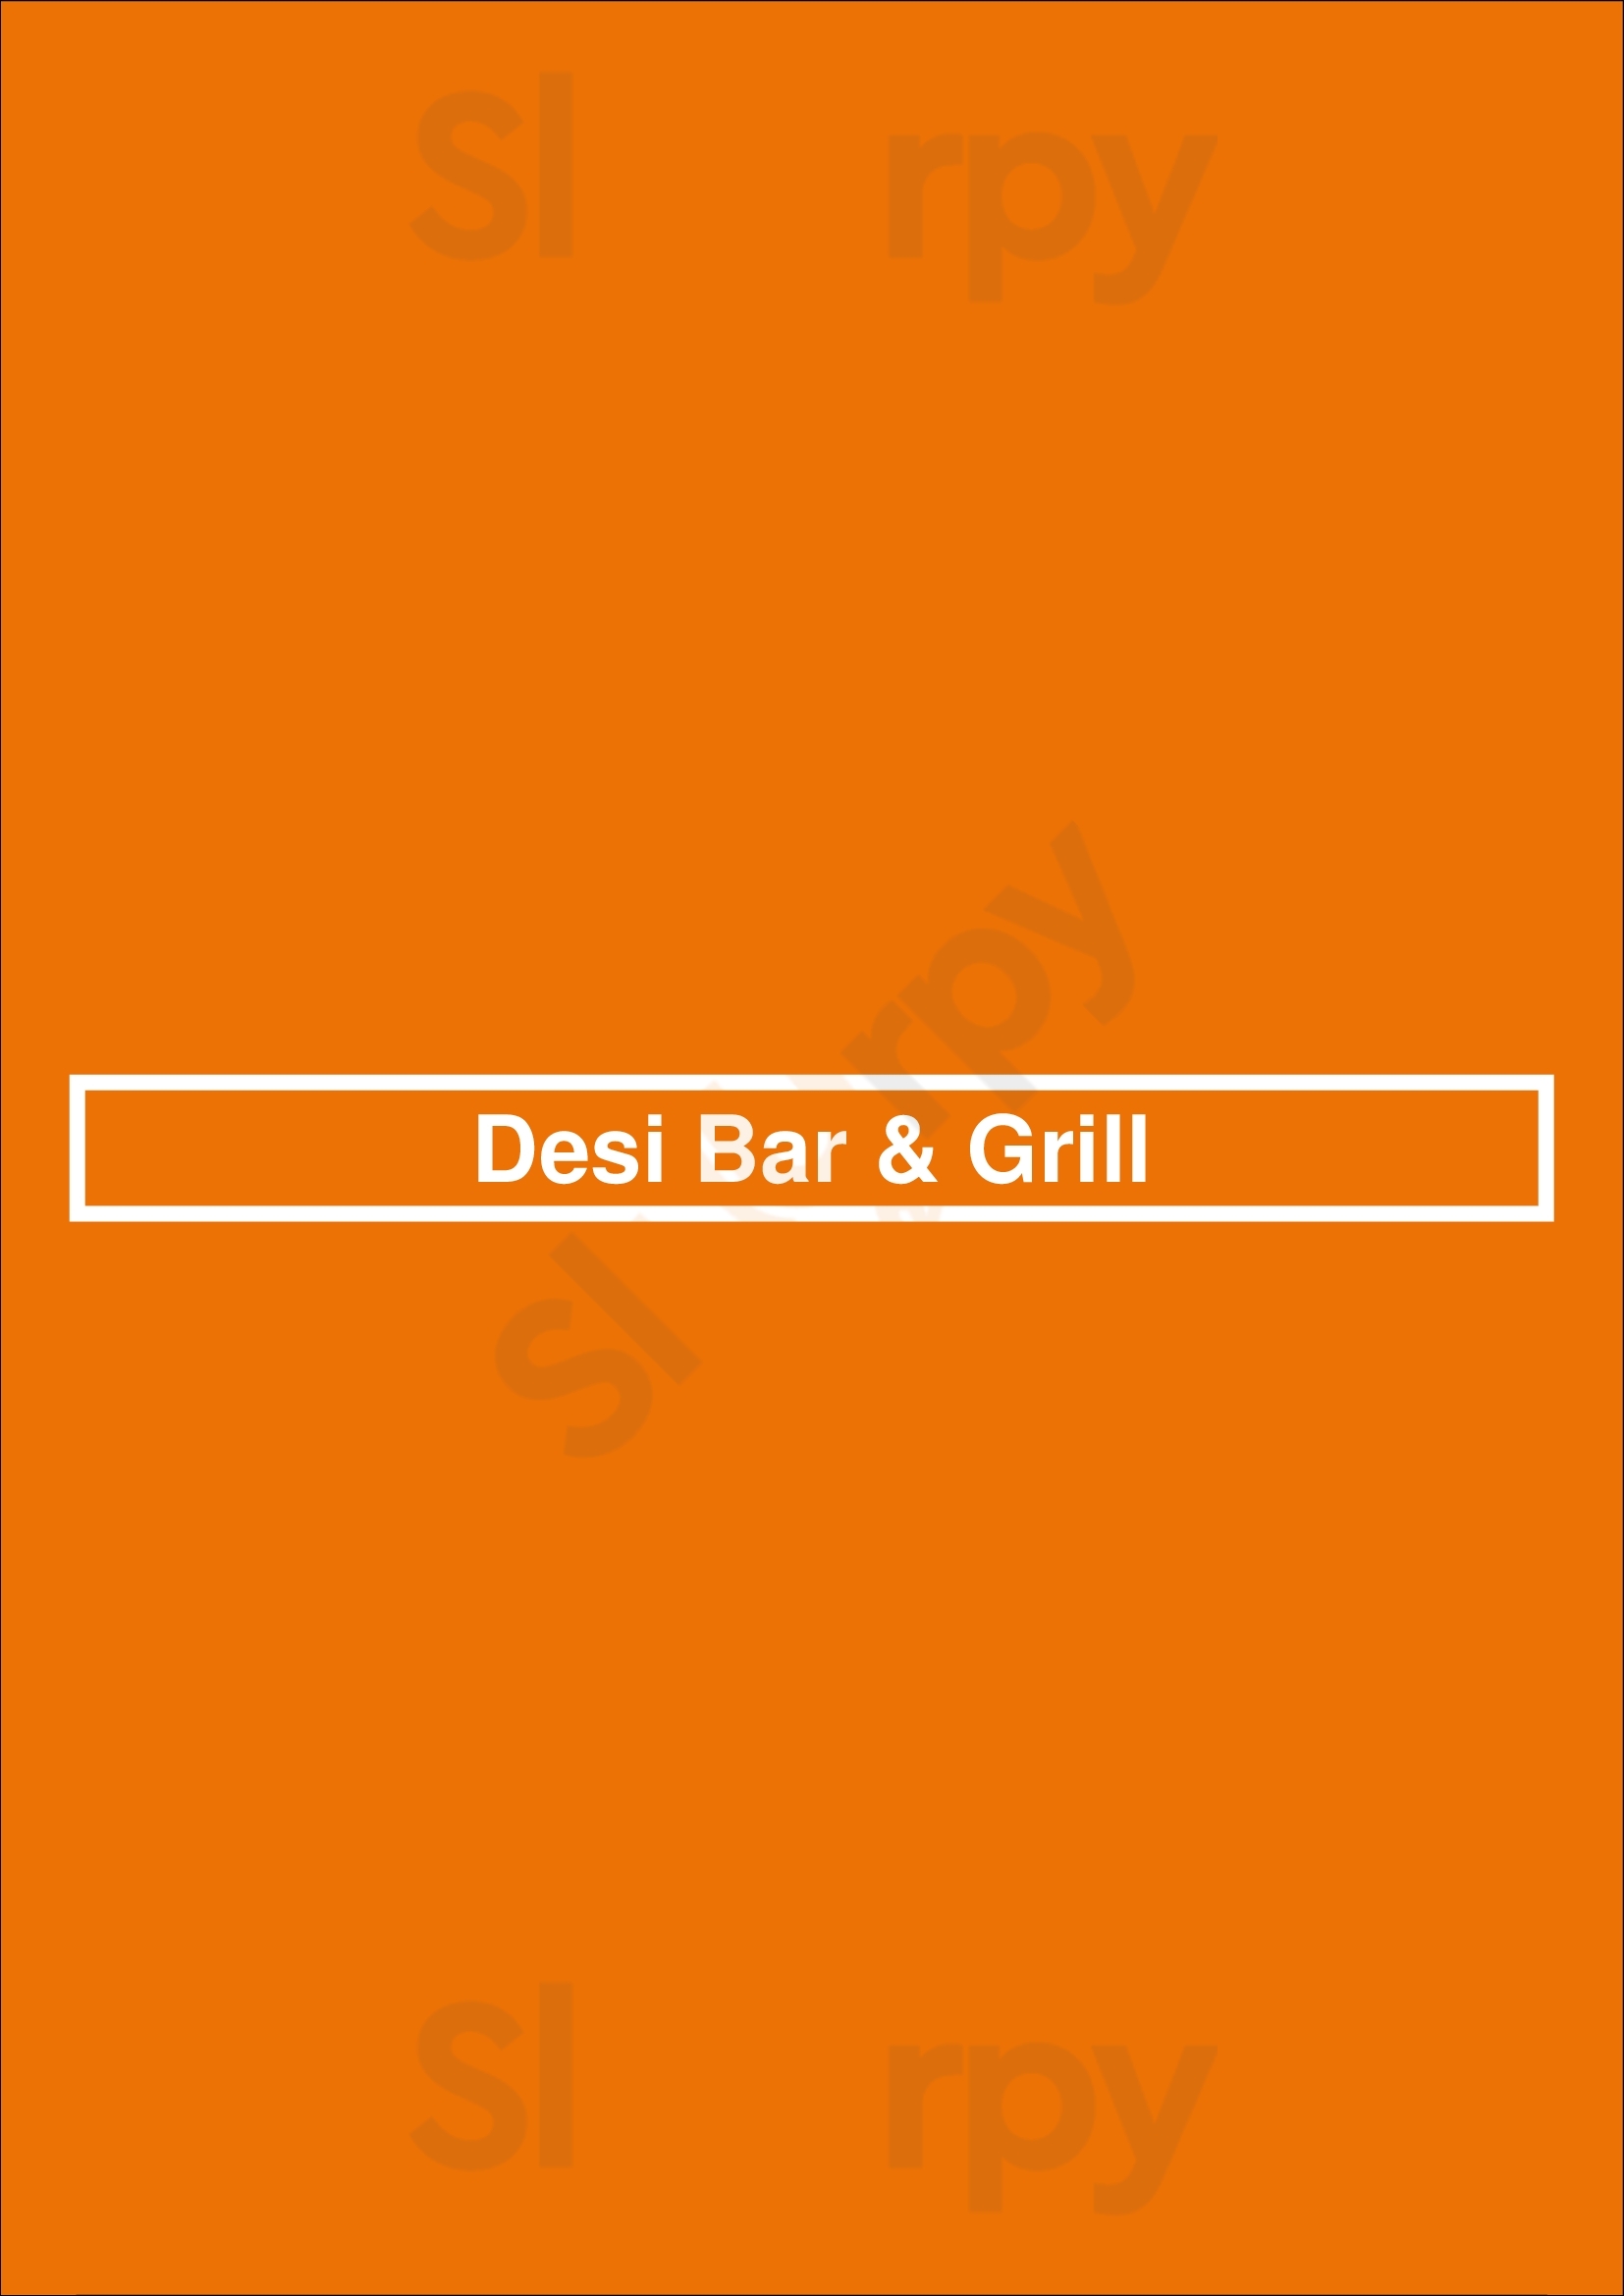 Desi Bar & Grill Mississauga Menu - 1